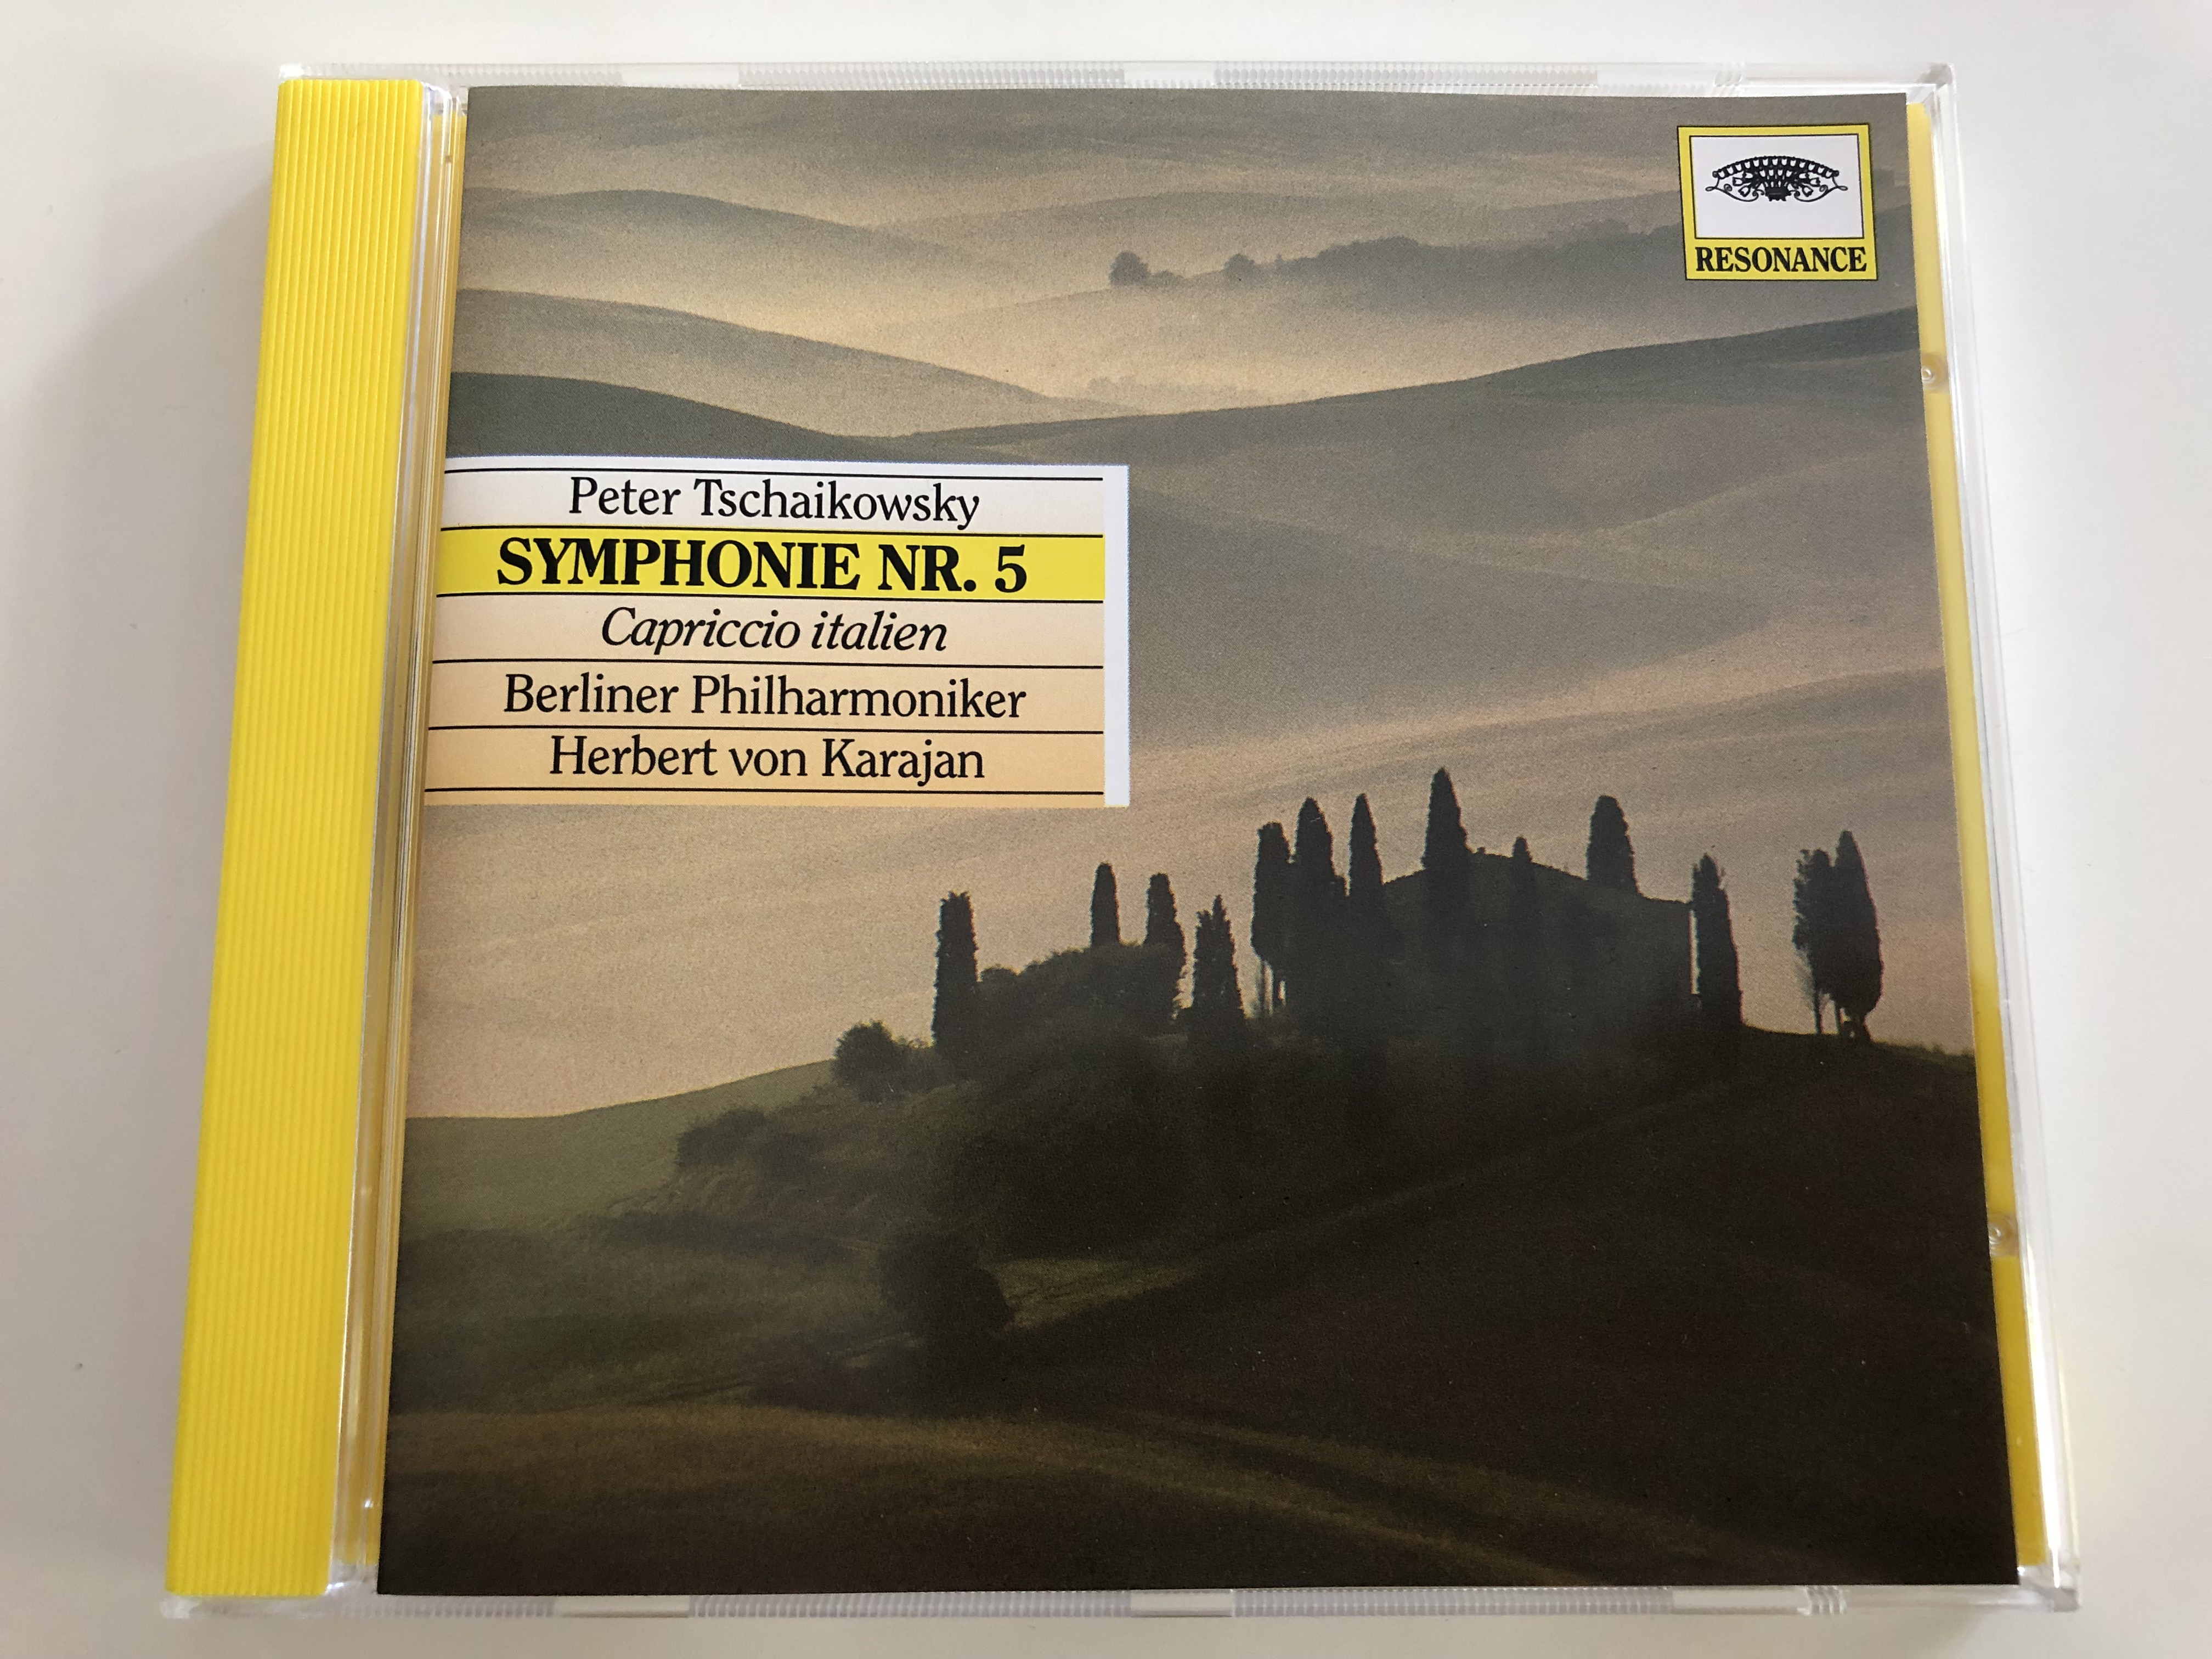 peter-tschaikowsky-symphonie-nr.-5-capriccio-italien-berliner-philharmoniker-conducted-by-herbert-von-karajan-audio-cd-resonance-445-026-2-1-.jpg